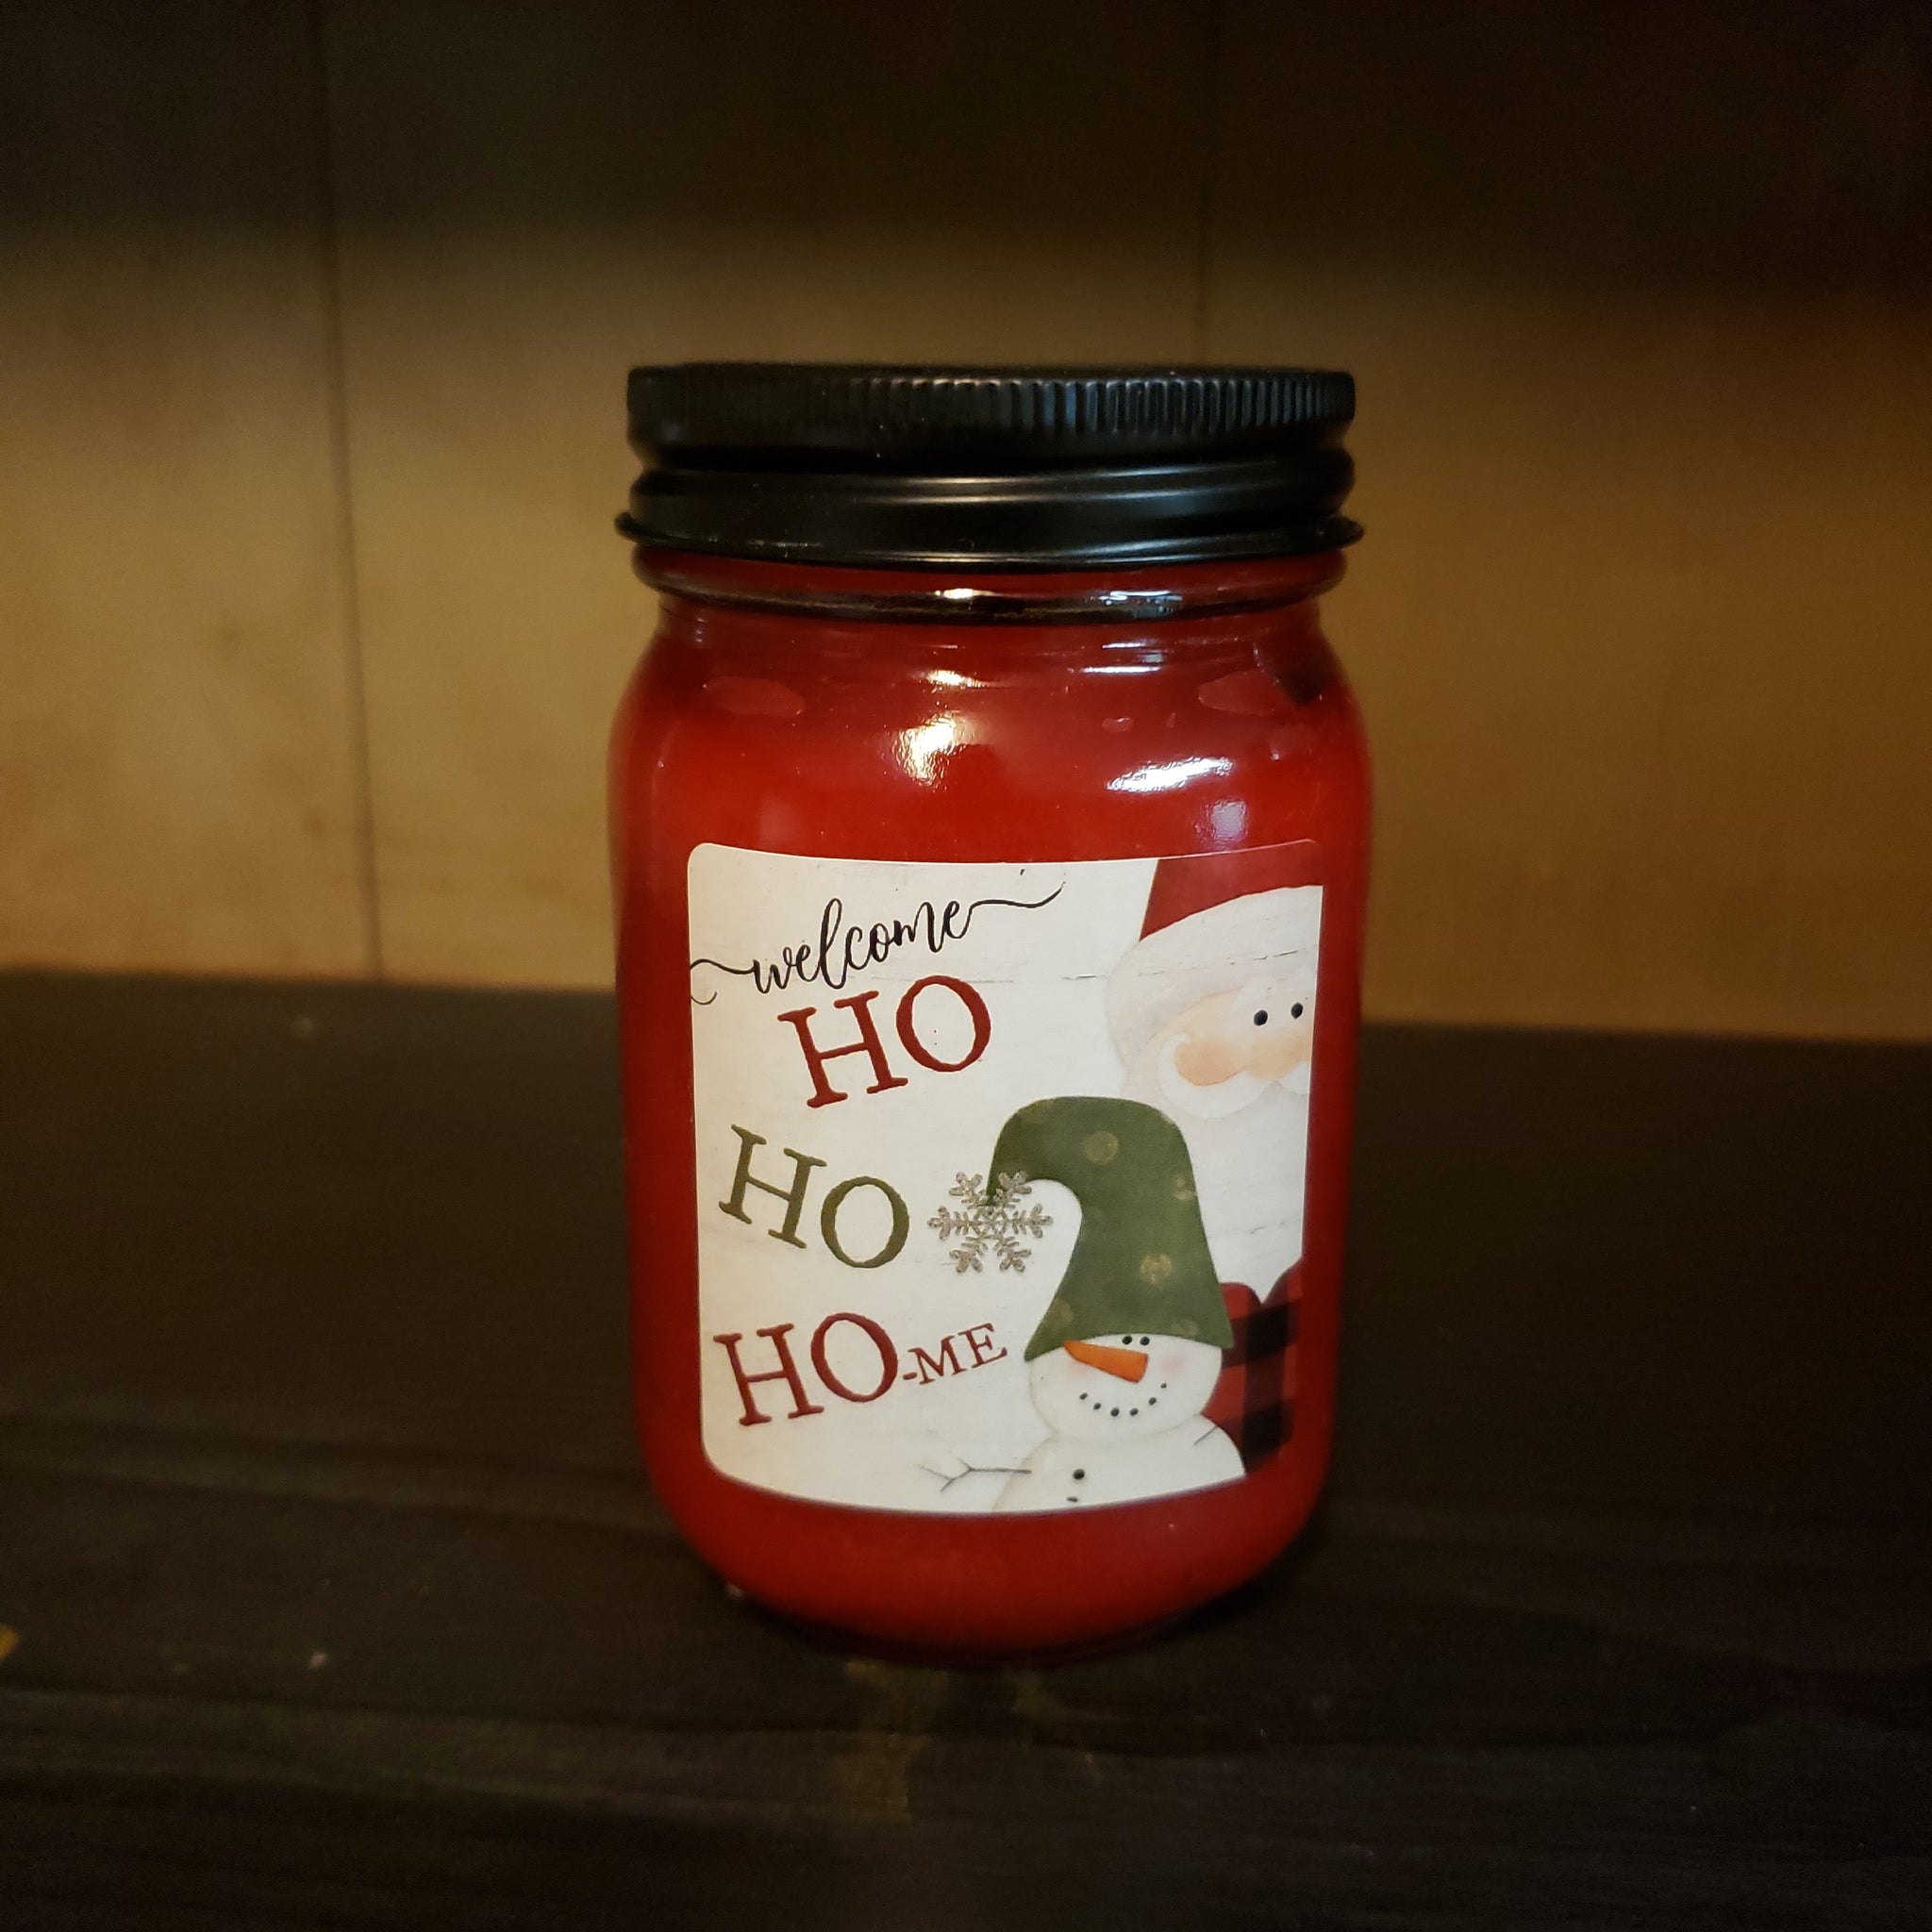 HO HO Home - Hollyberry Candle